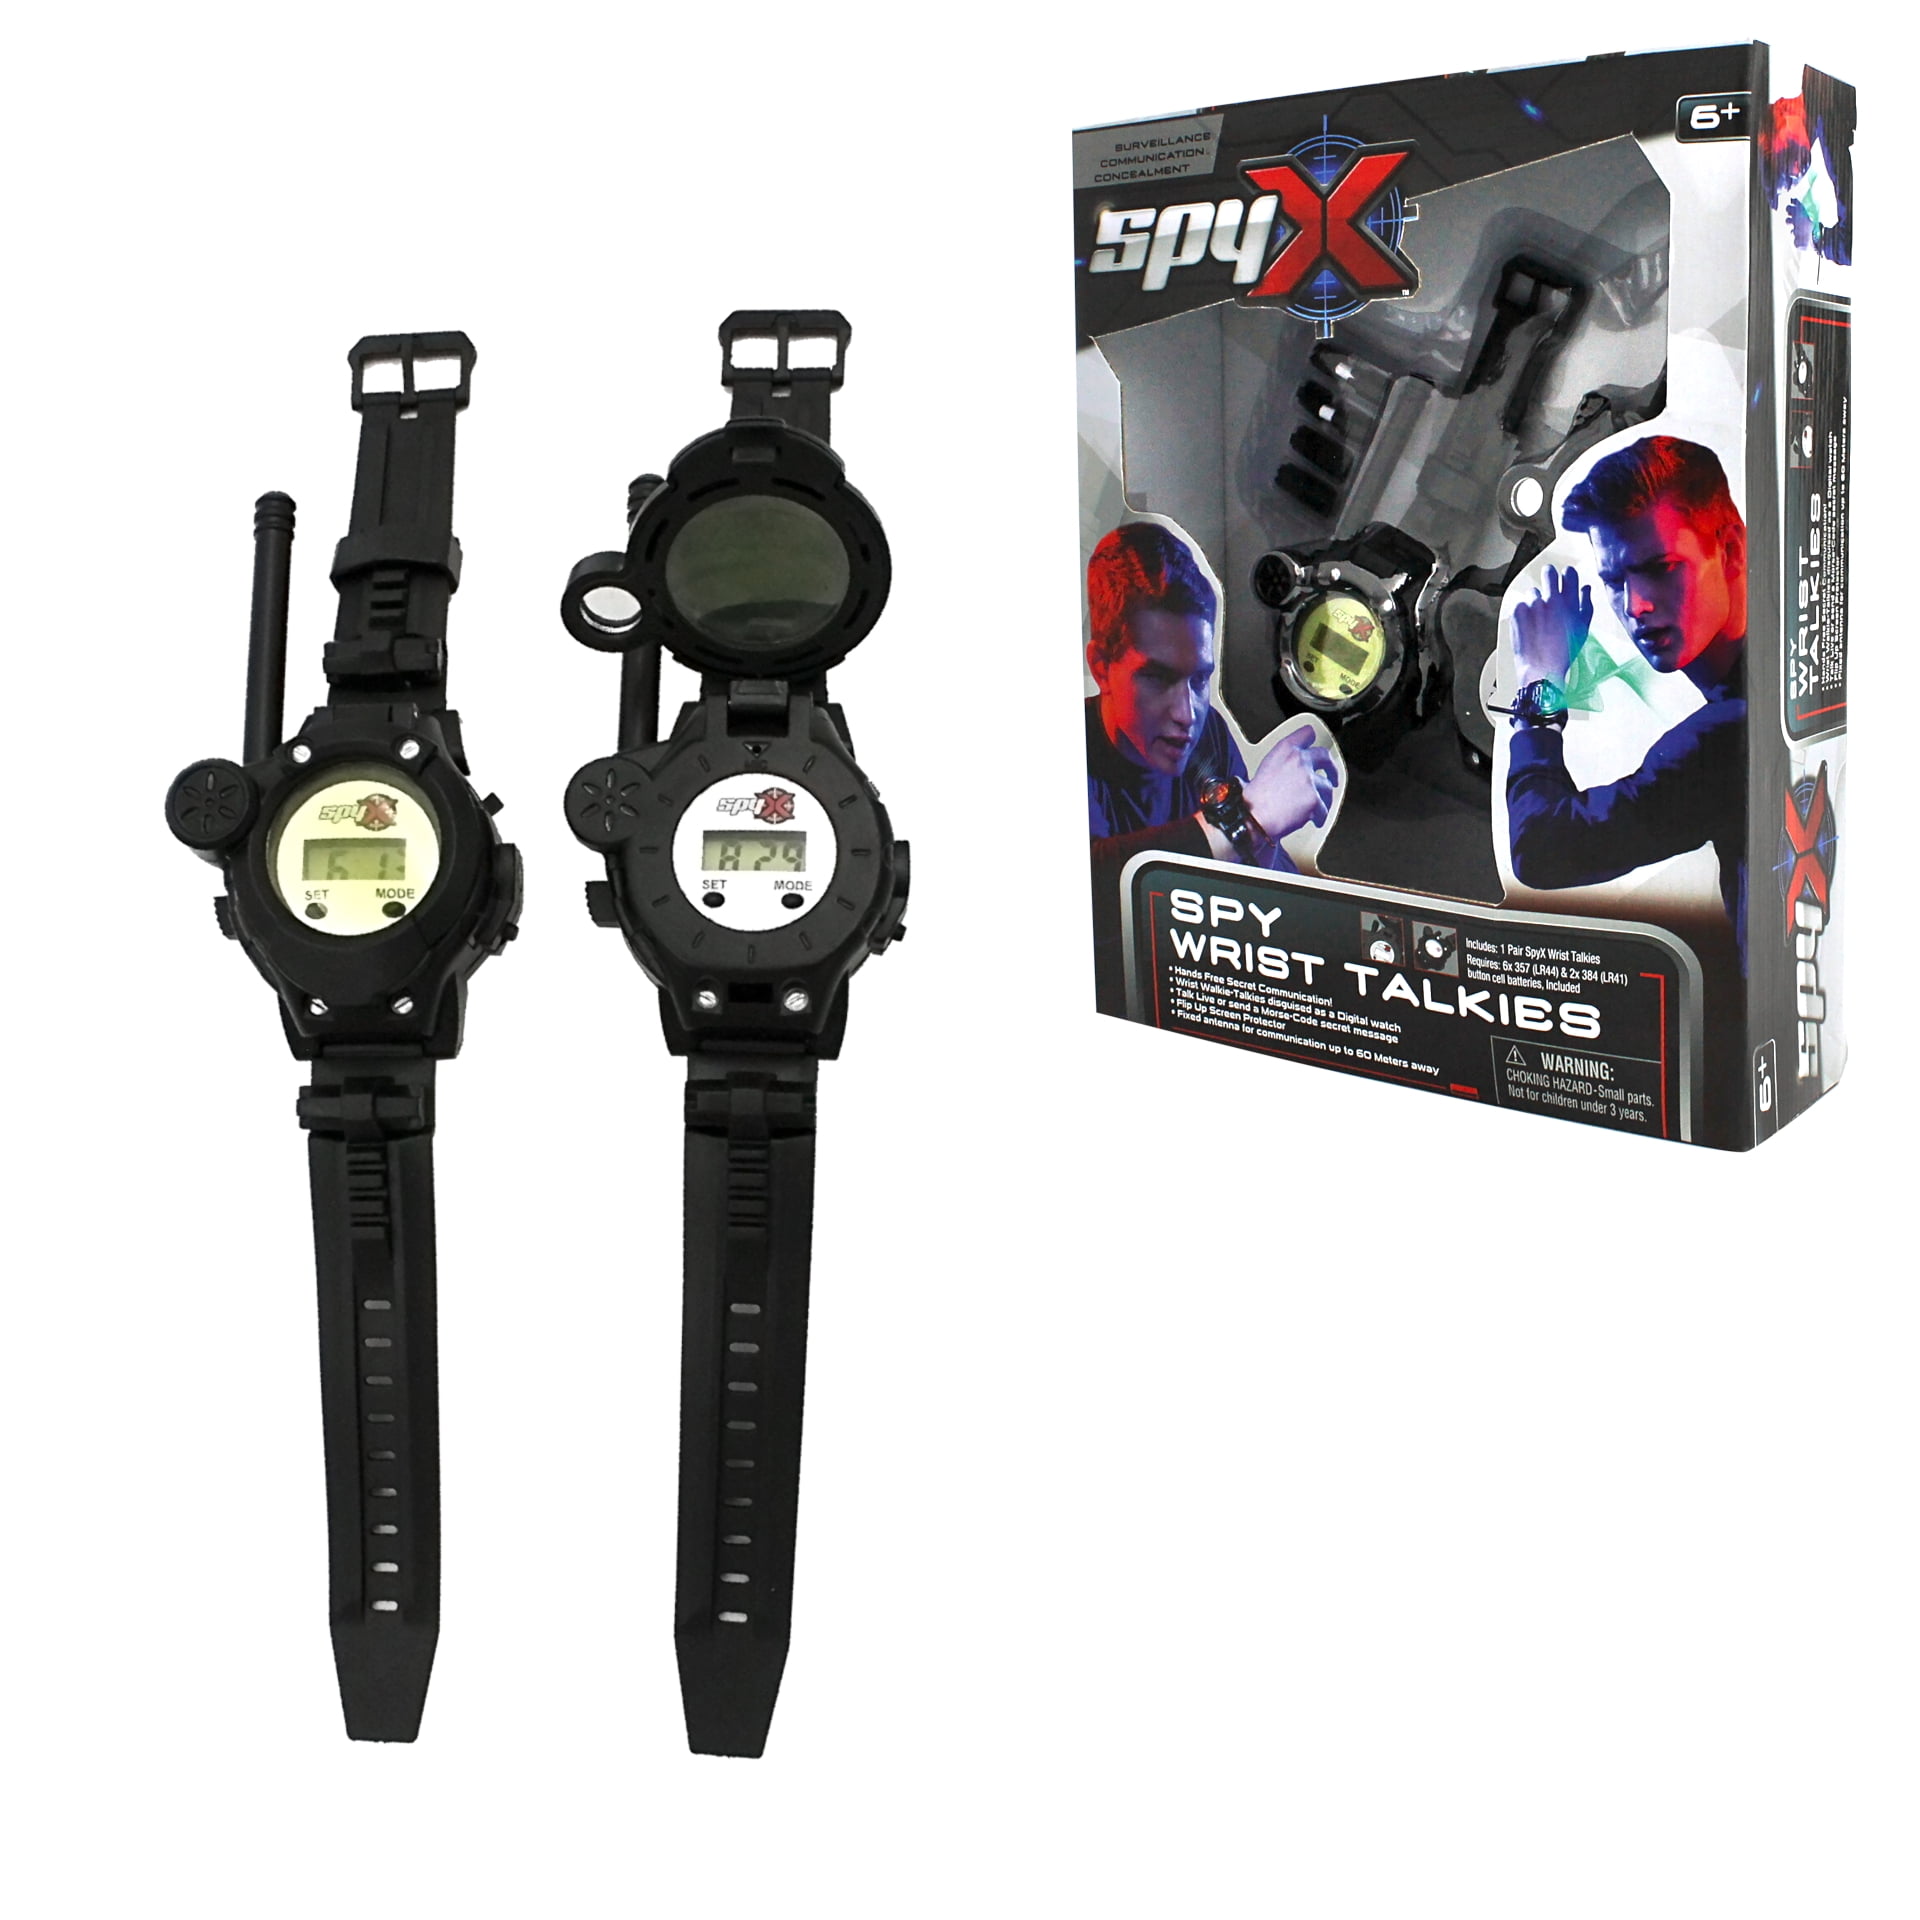 SpyX / Spy Wrist Talkies. 8-1 Multifunctional Walkie Talkies Toy Spy Watch  for Kids. Hands-Free Two-Way Radio Spy Gadget Watch for Junior Secret Agent